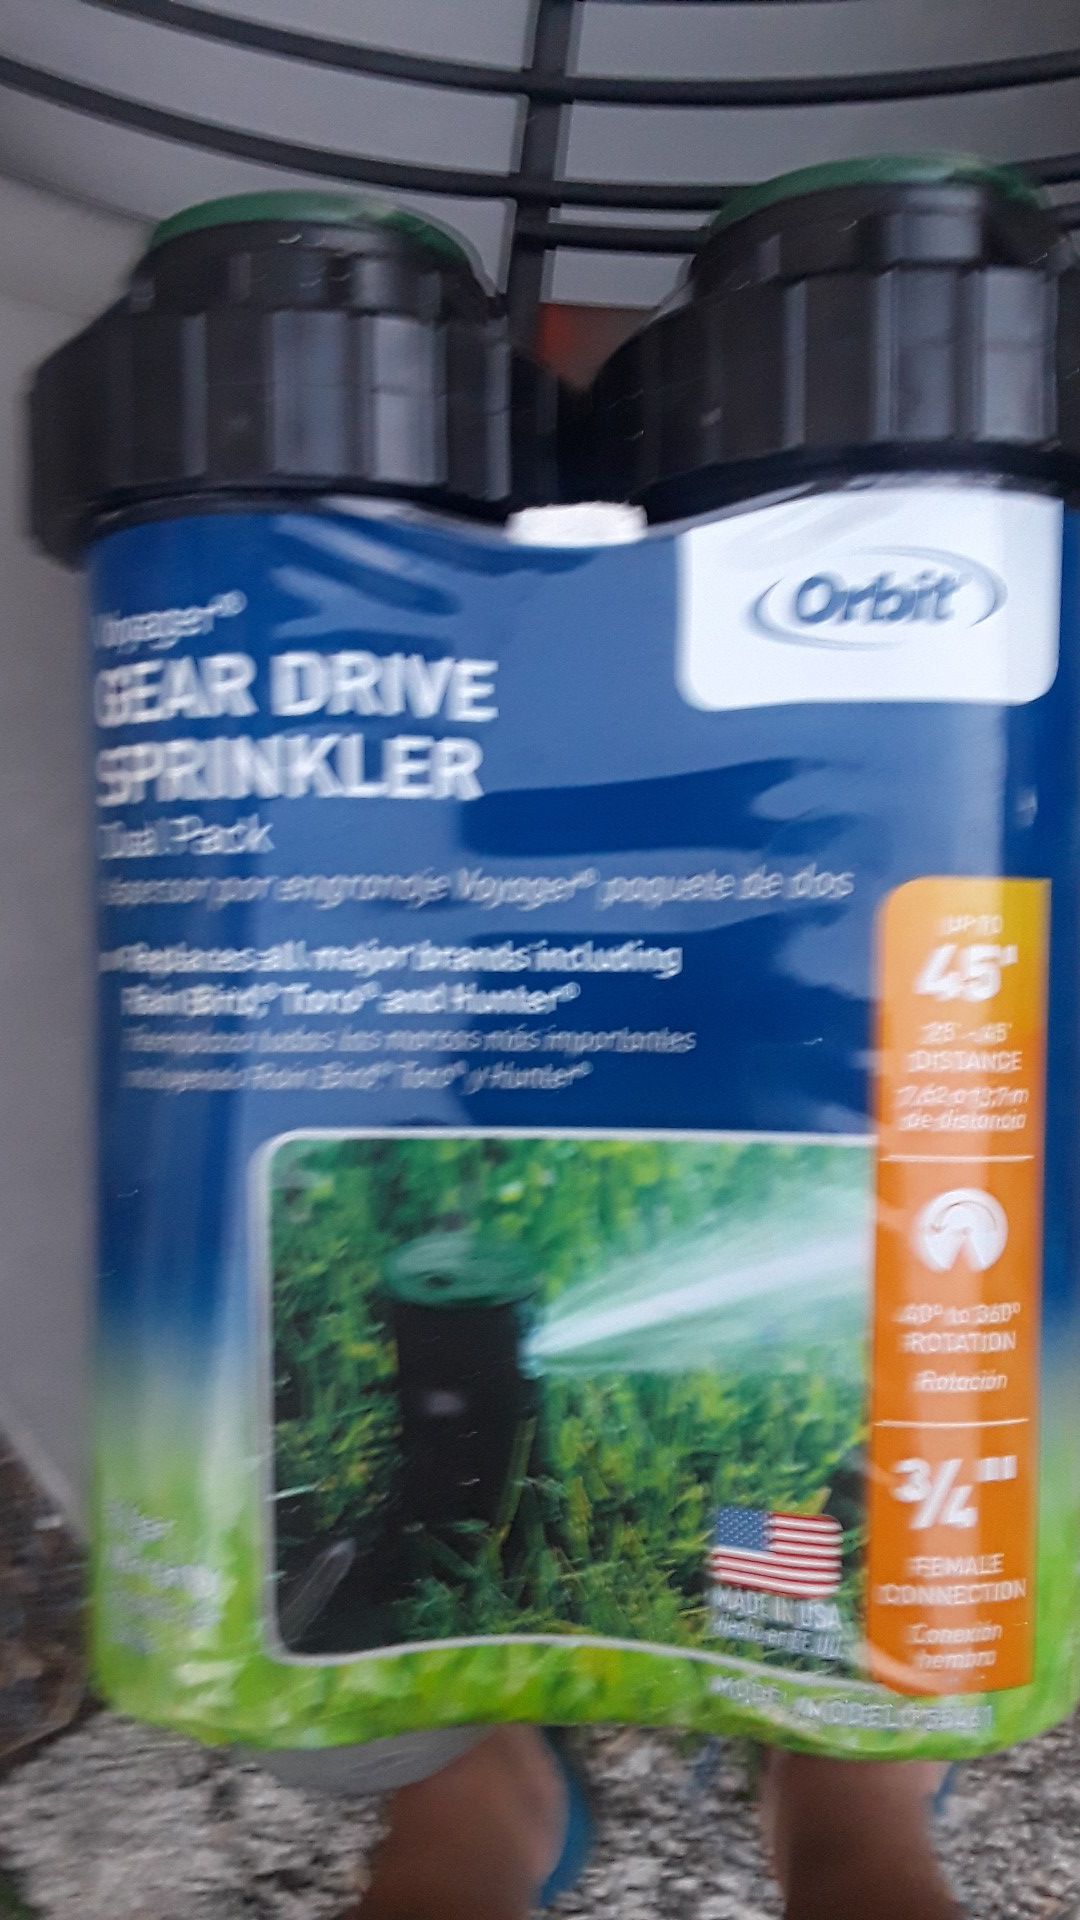 Orbit gear drive pop up sprinklers